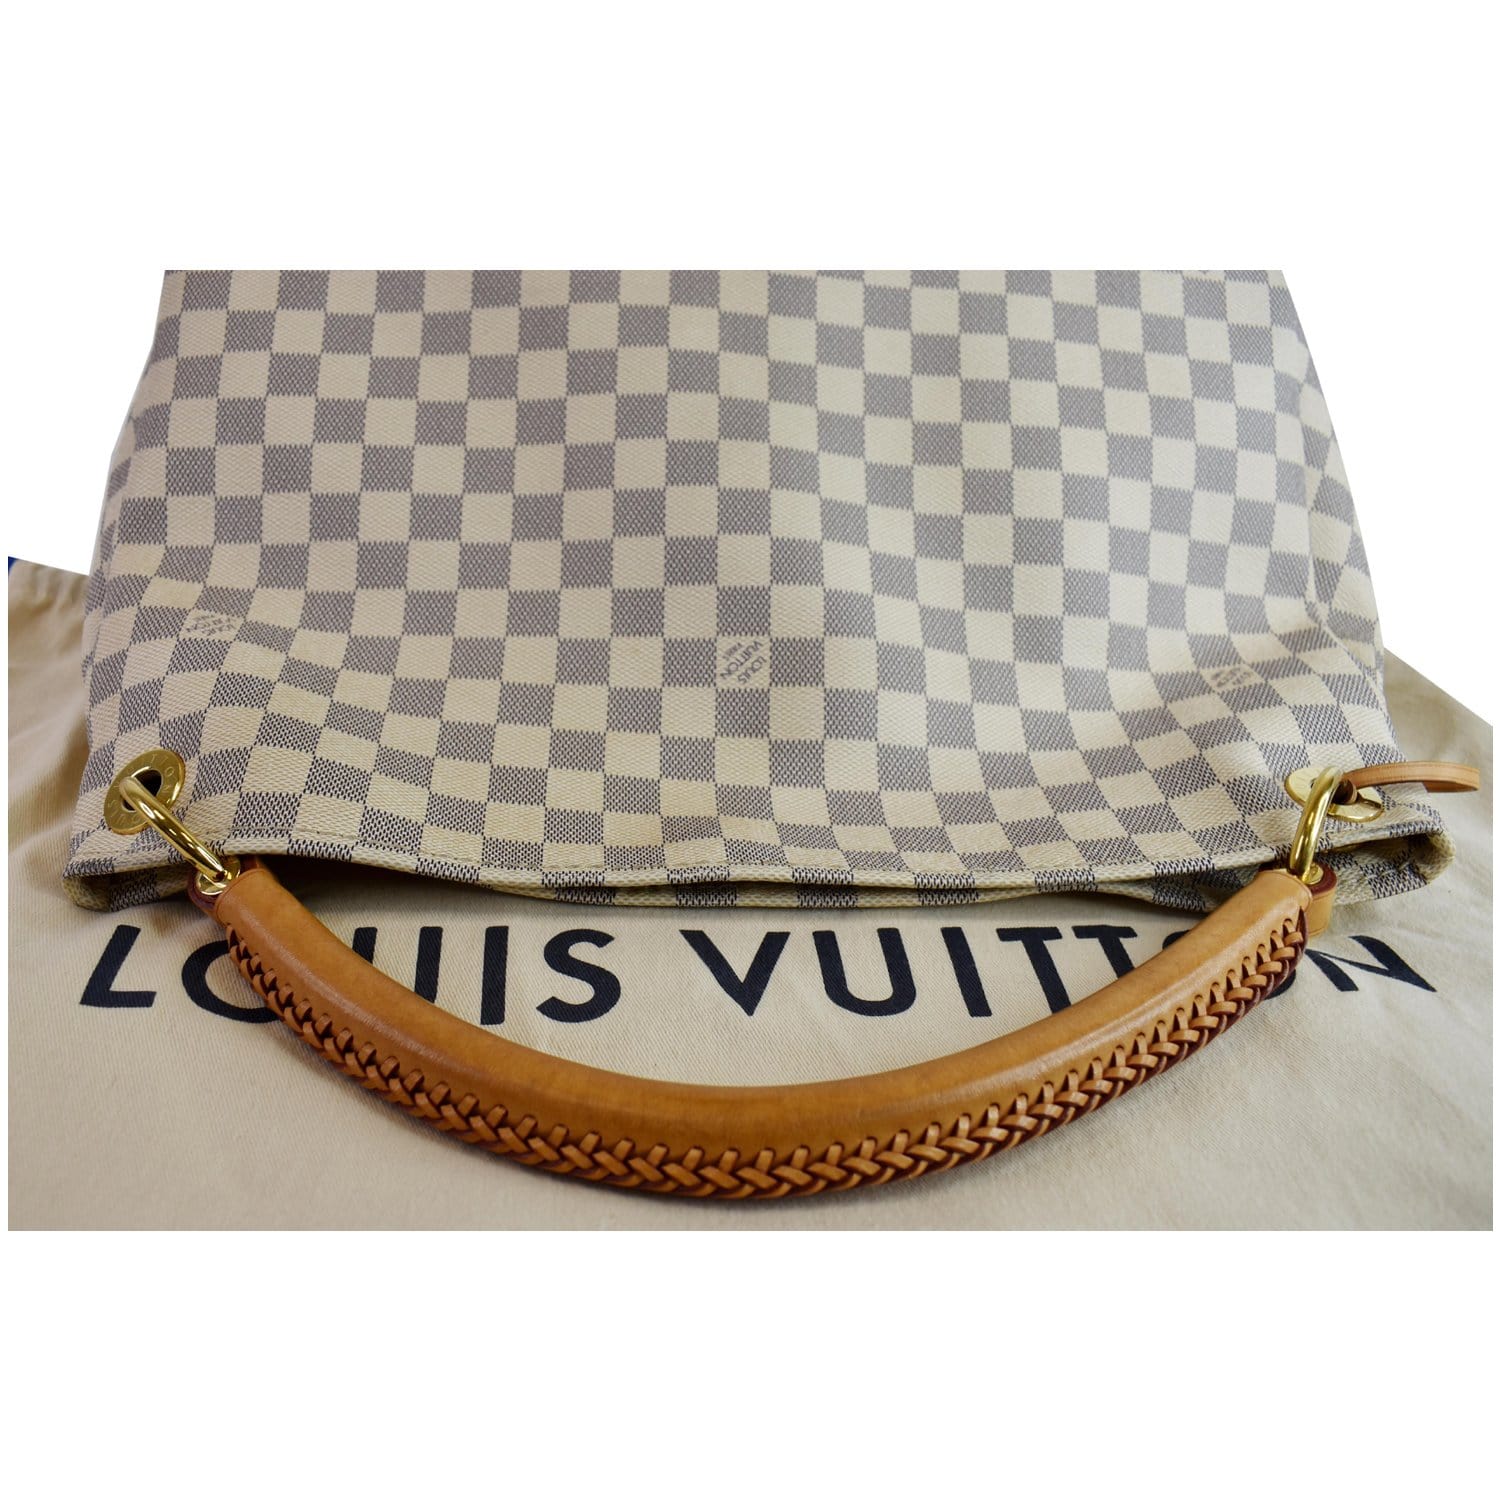 Louis Vuitton Artsy Mm White Damier Azur Canvas Hobo Bag - MyDesignerly